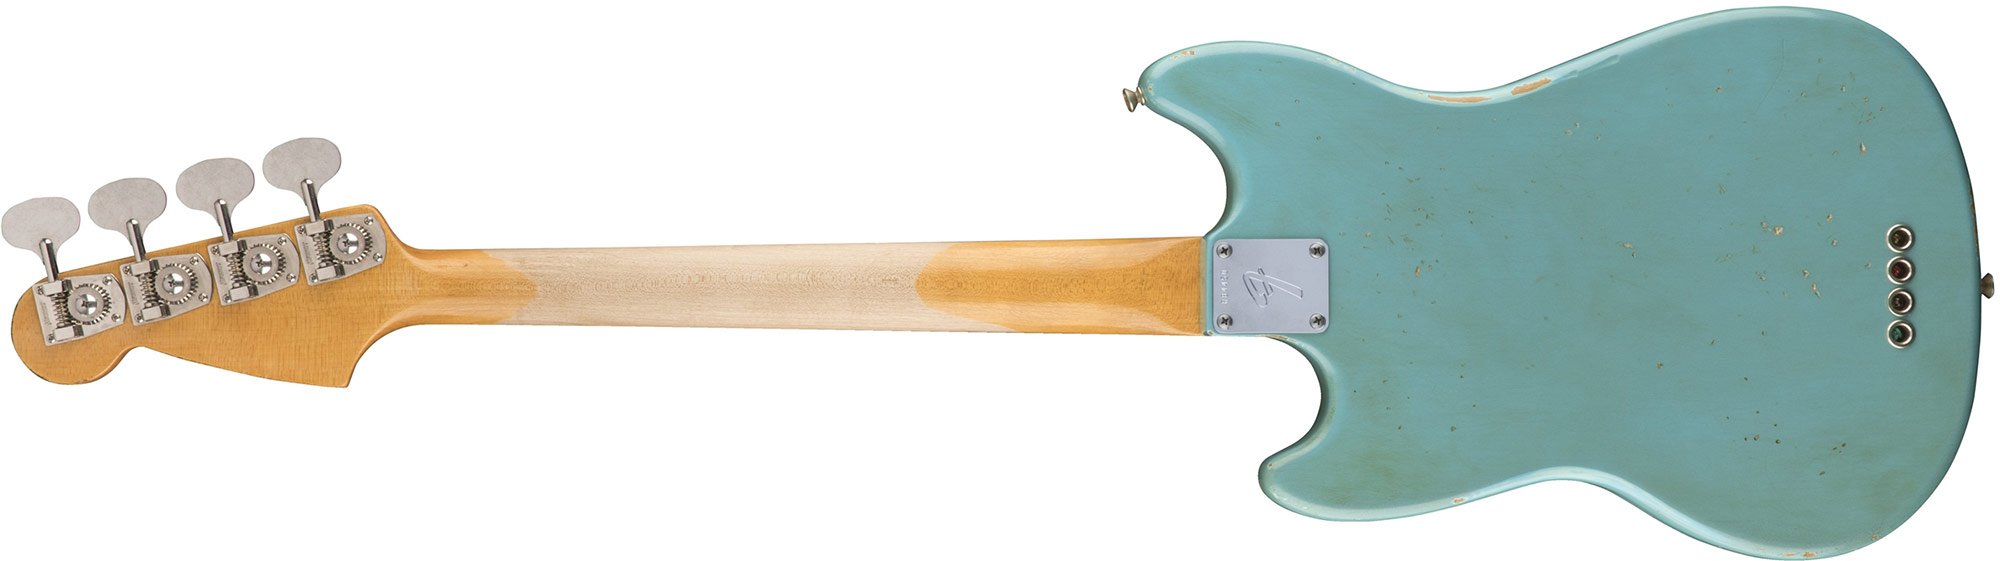 Fender Justin Meldal-johnsen Jmj Mustang Bass Road Worn Mex Rw - Faded Daphne Blue - E-Bass für Kinder - Variation 1